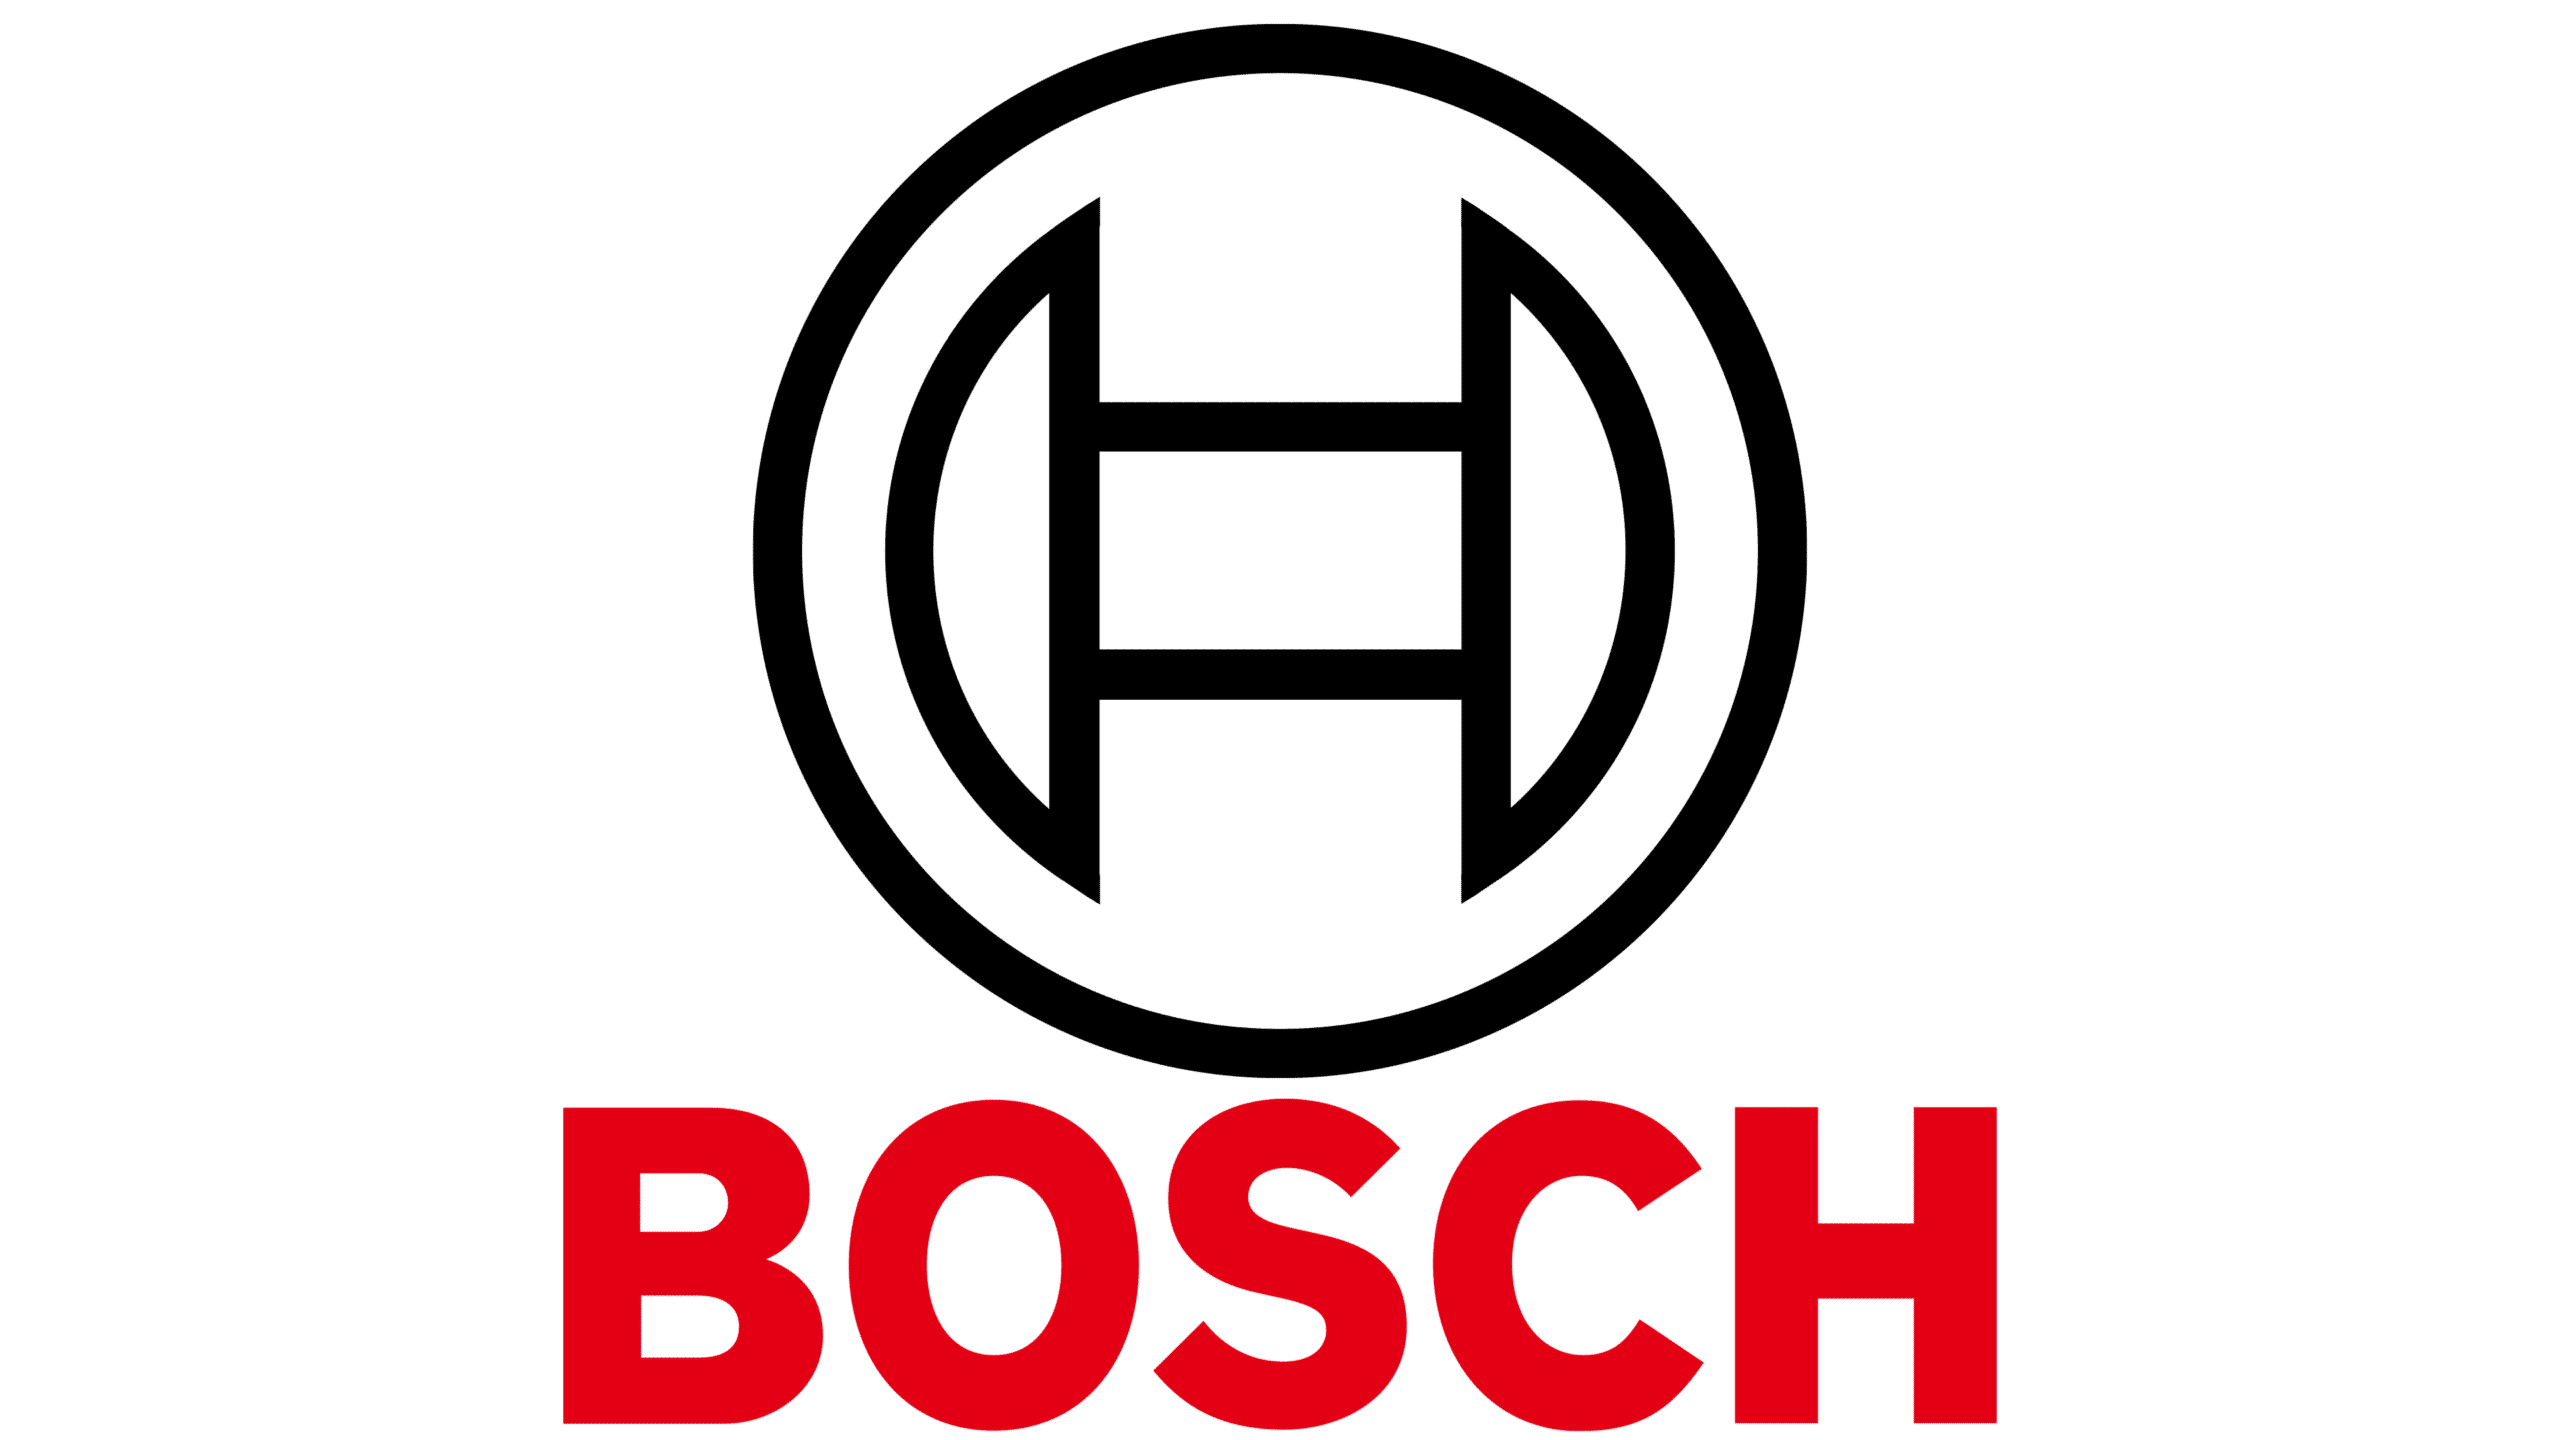 Who Makes Bosch Refrigerators?